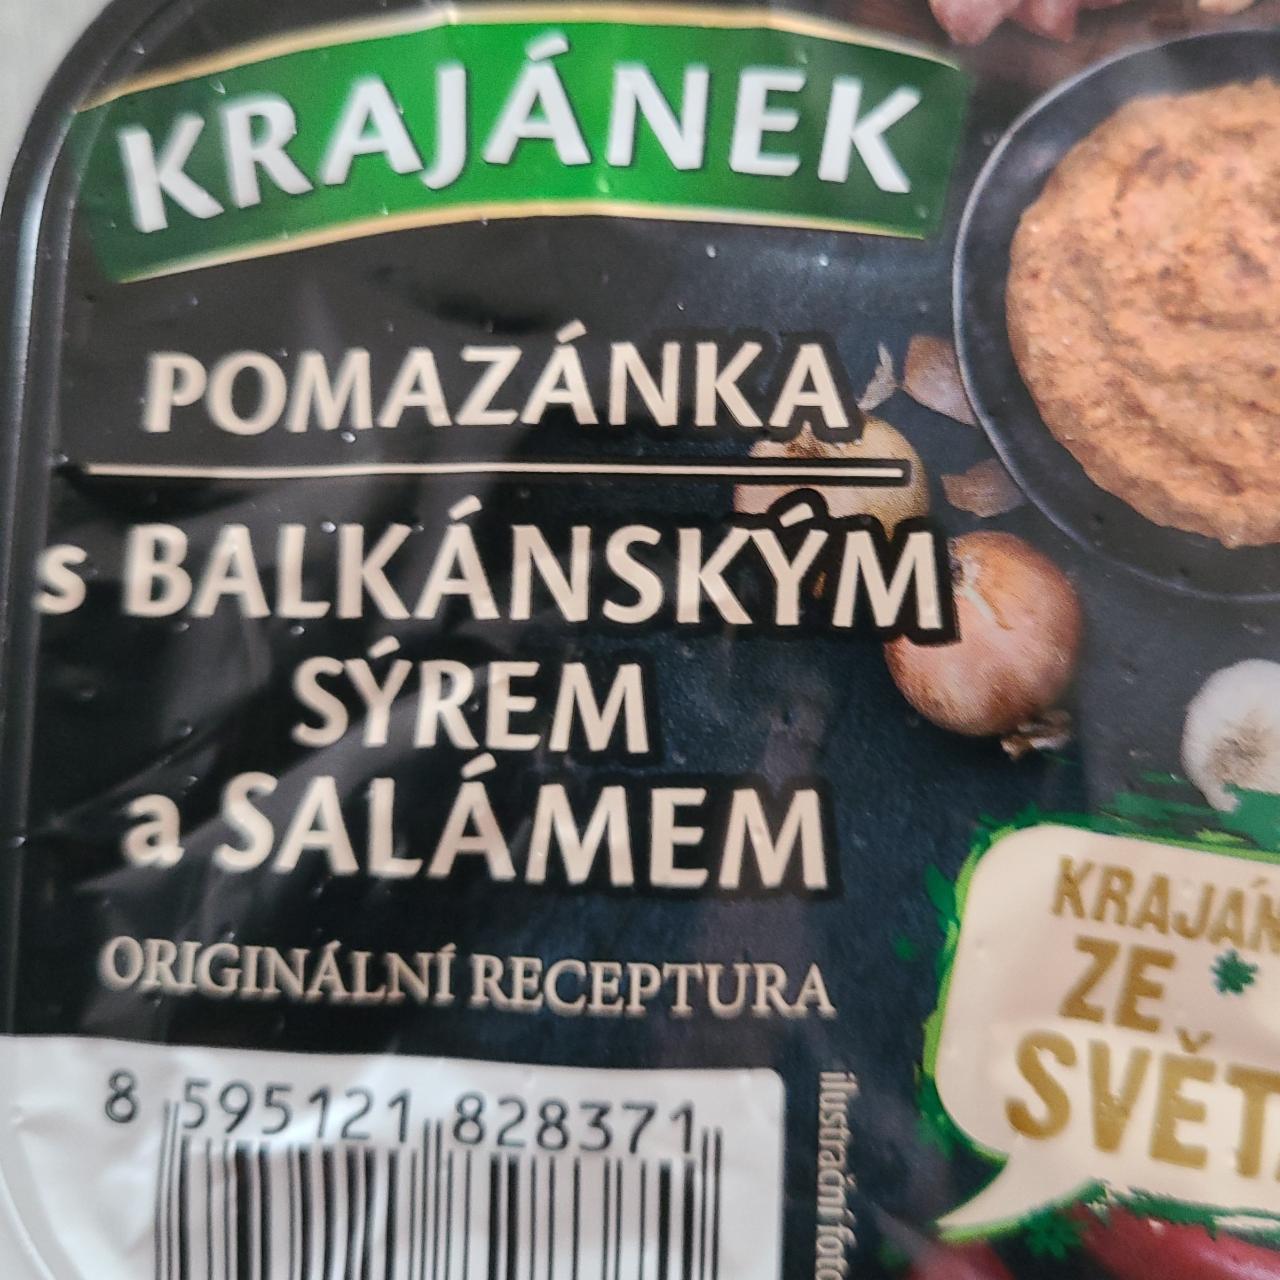 Fotografie - pomazánka s balkánský sýrem a salámem Krajánek